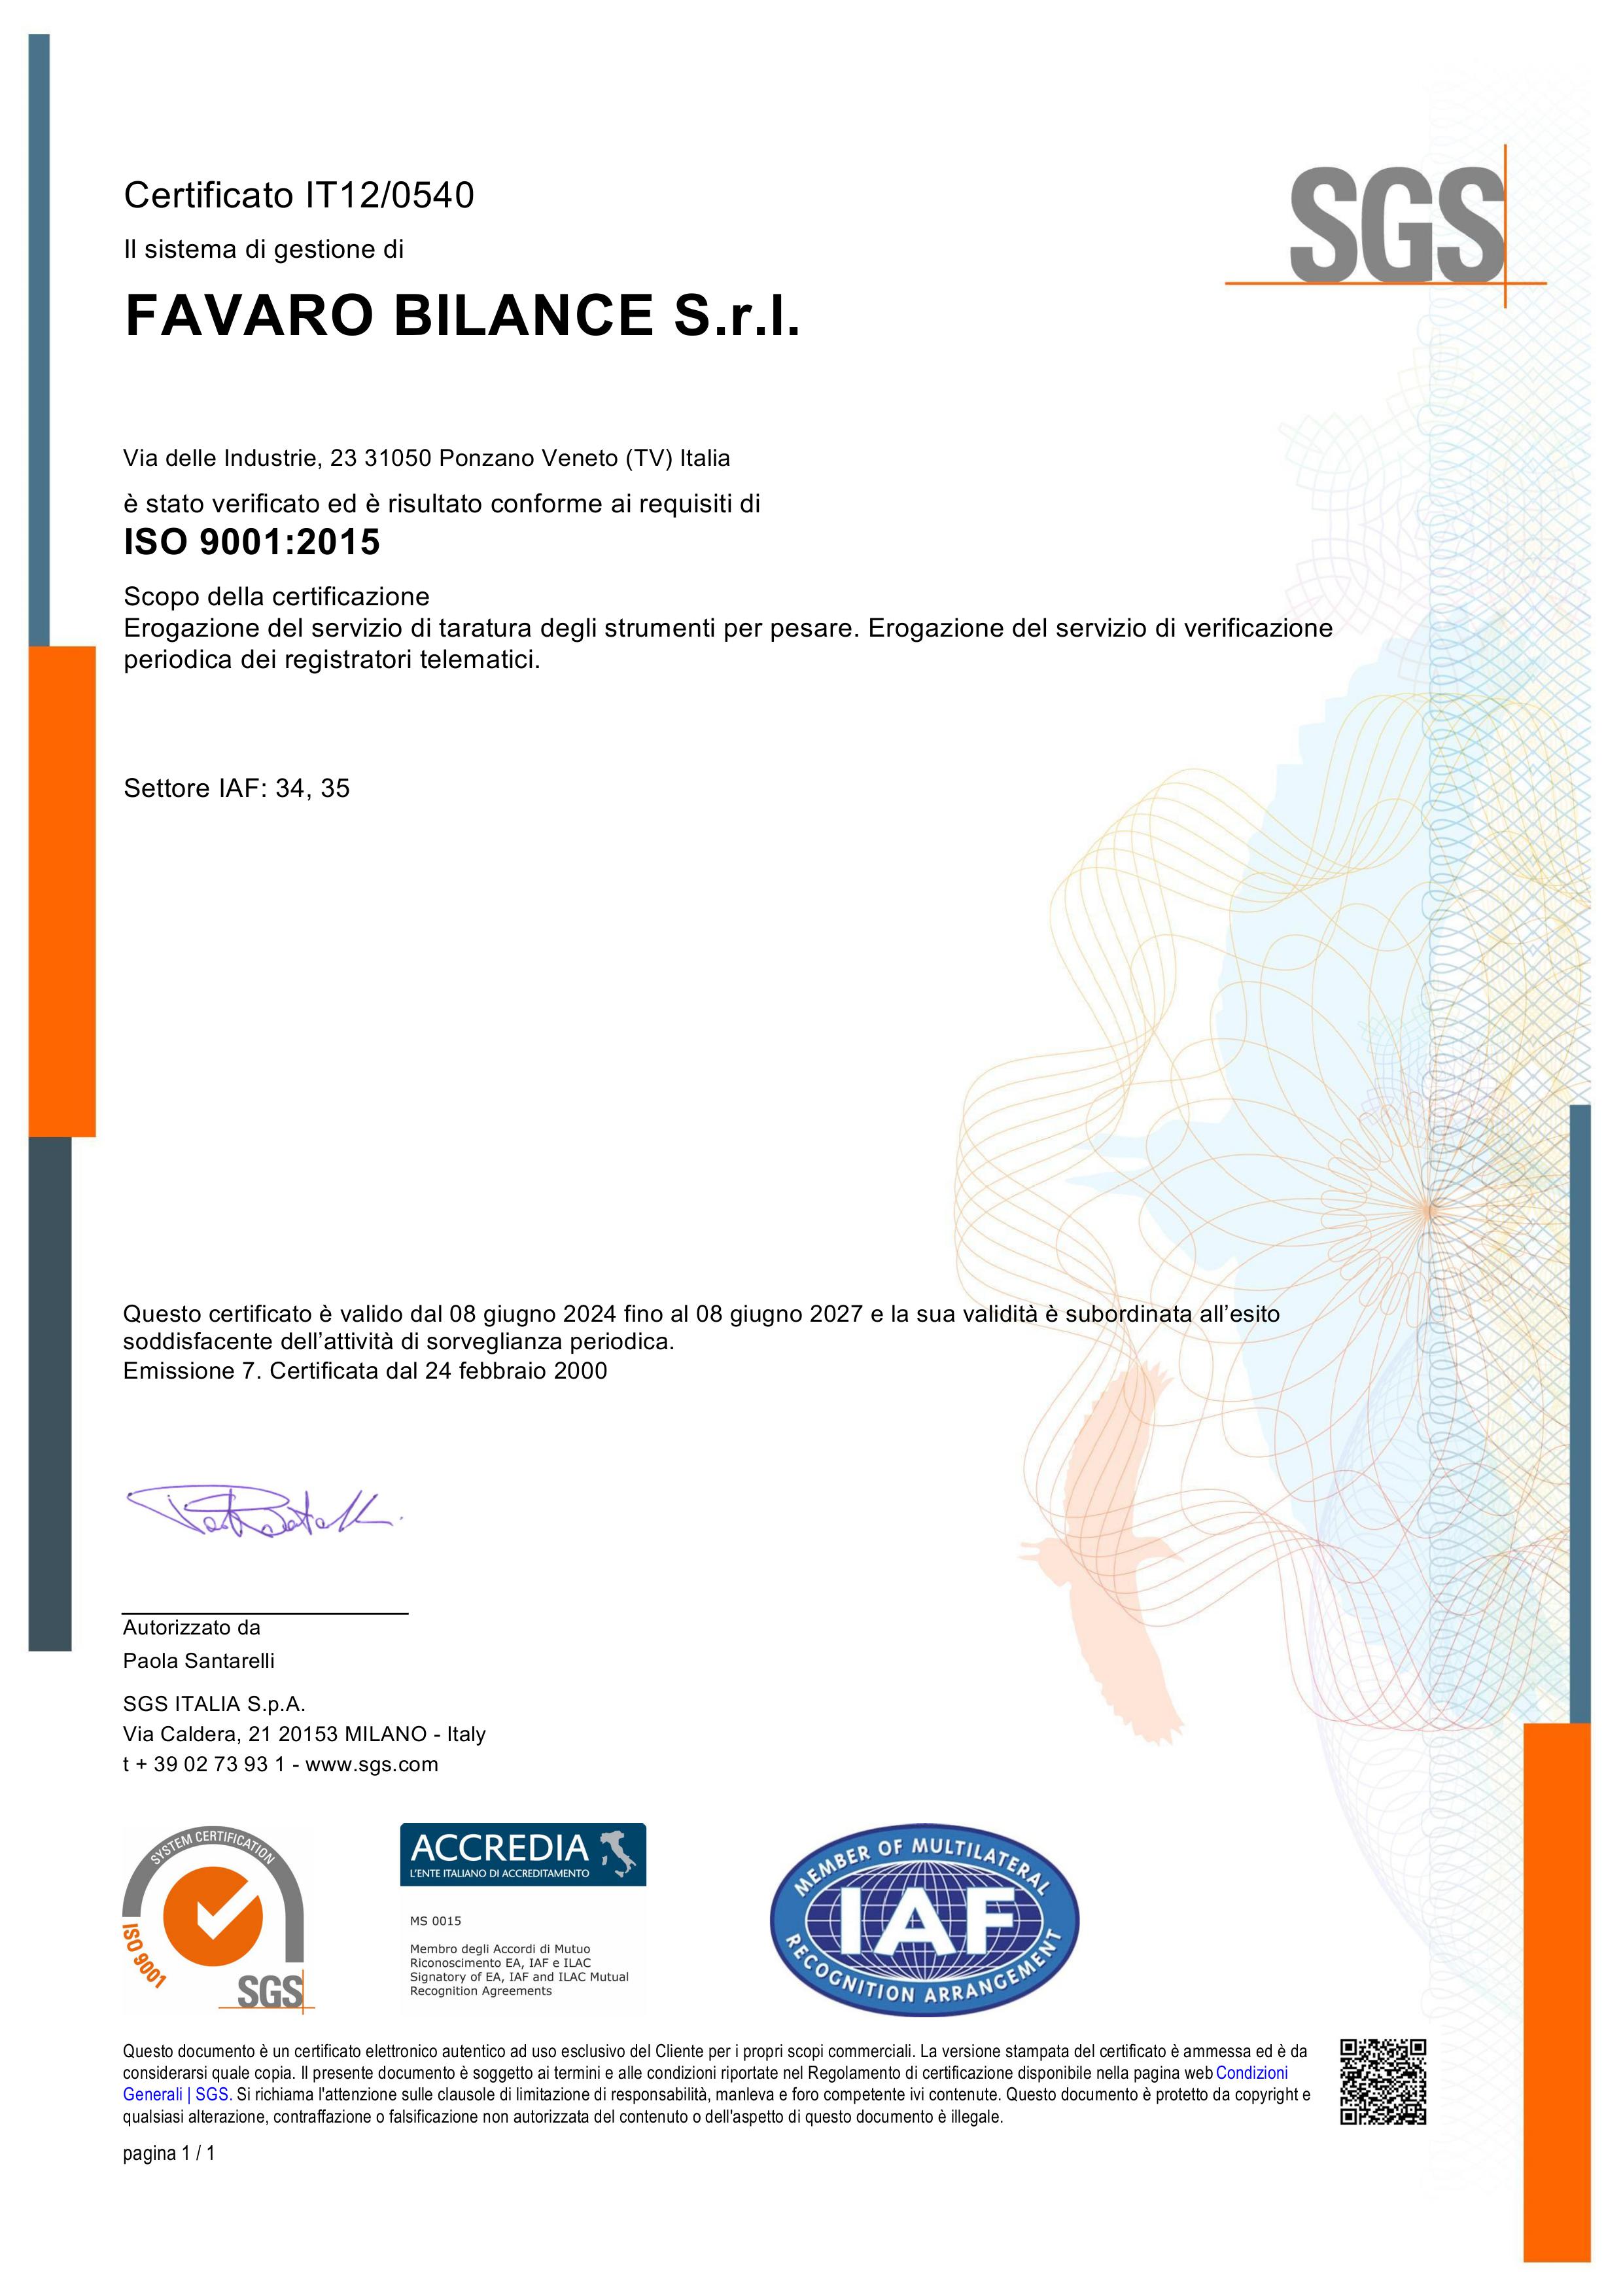 Certificazione ISO 9001/UNI EN ISO 9001